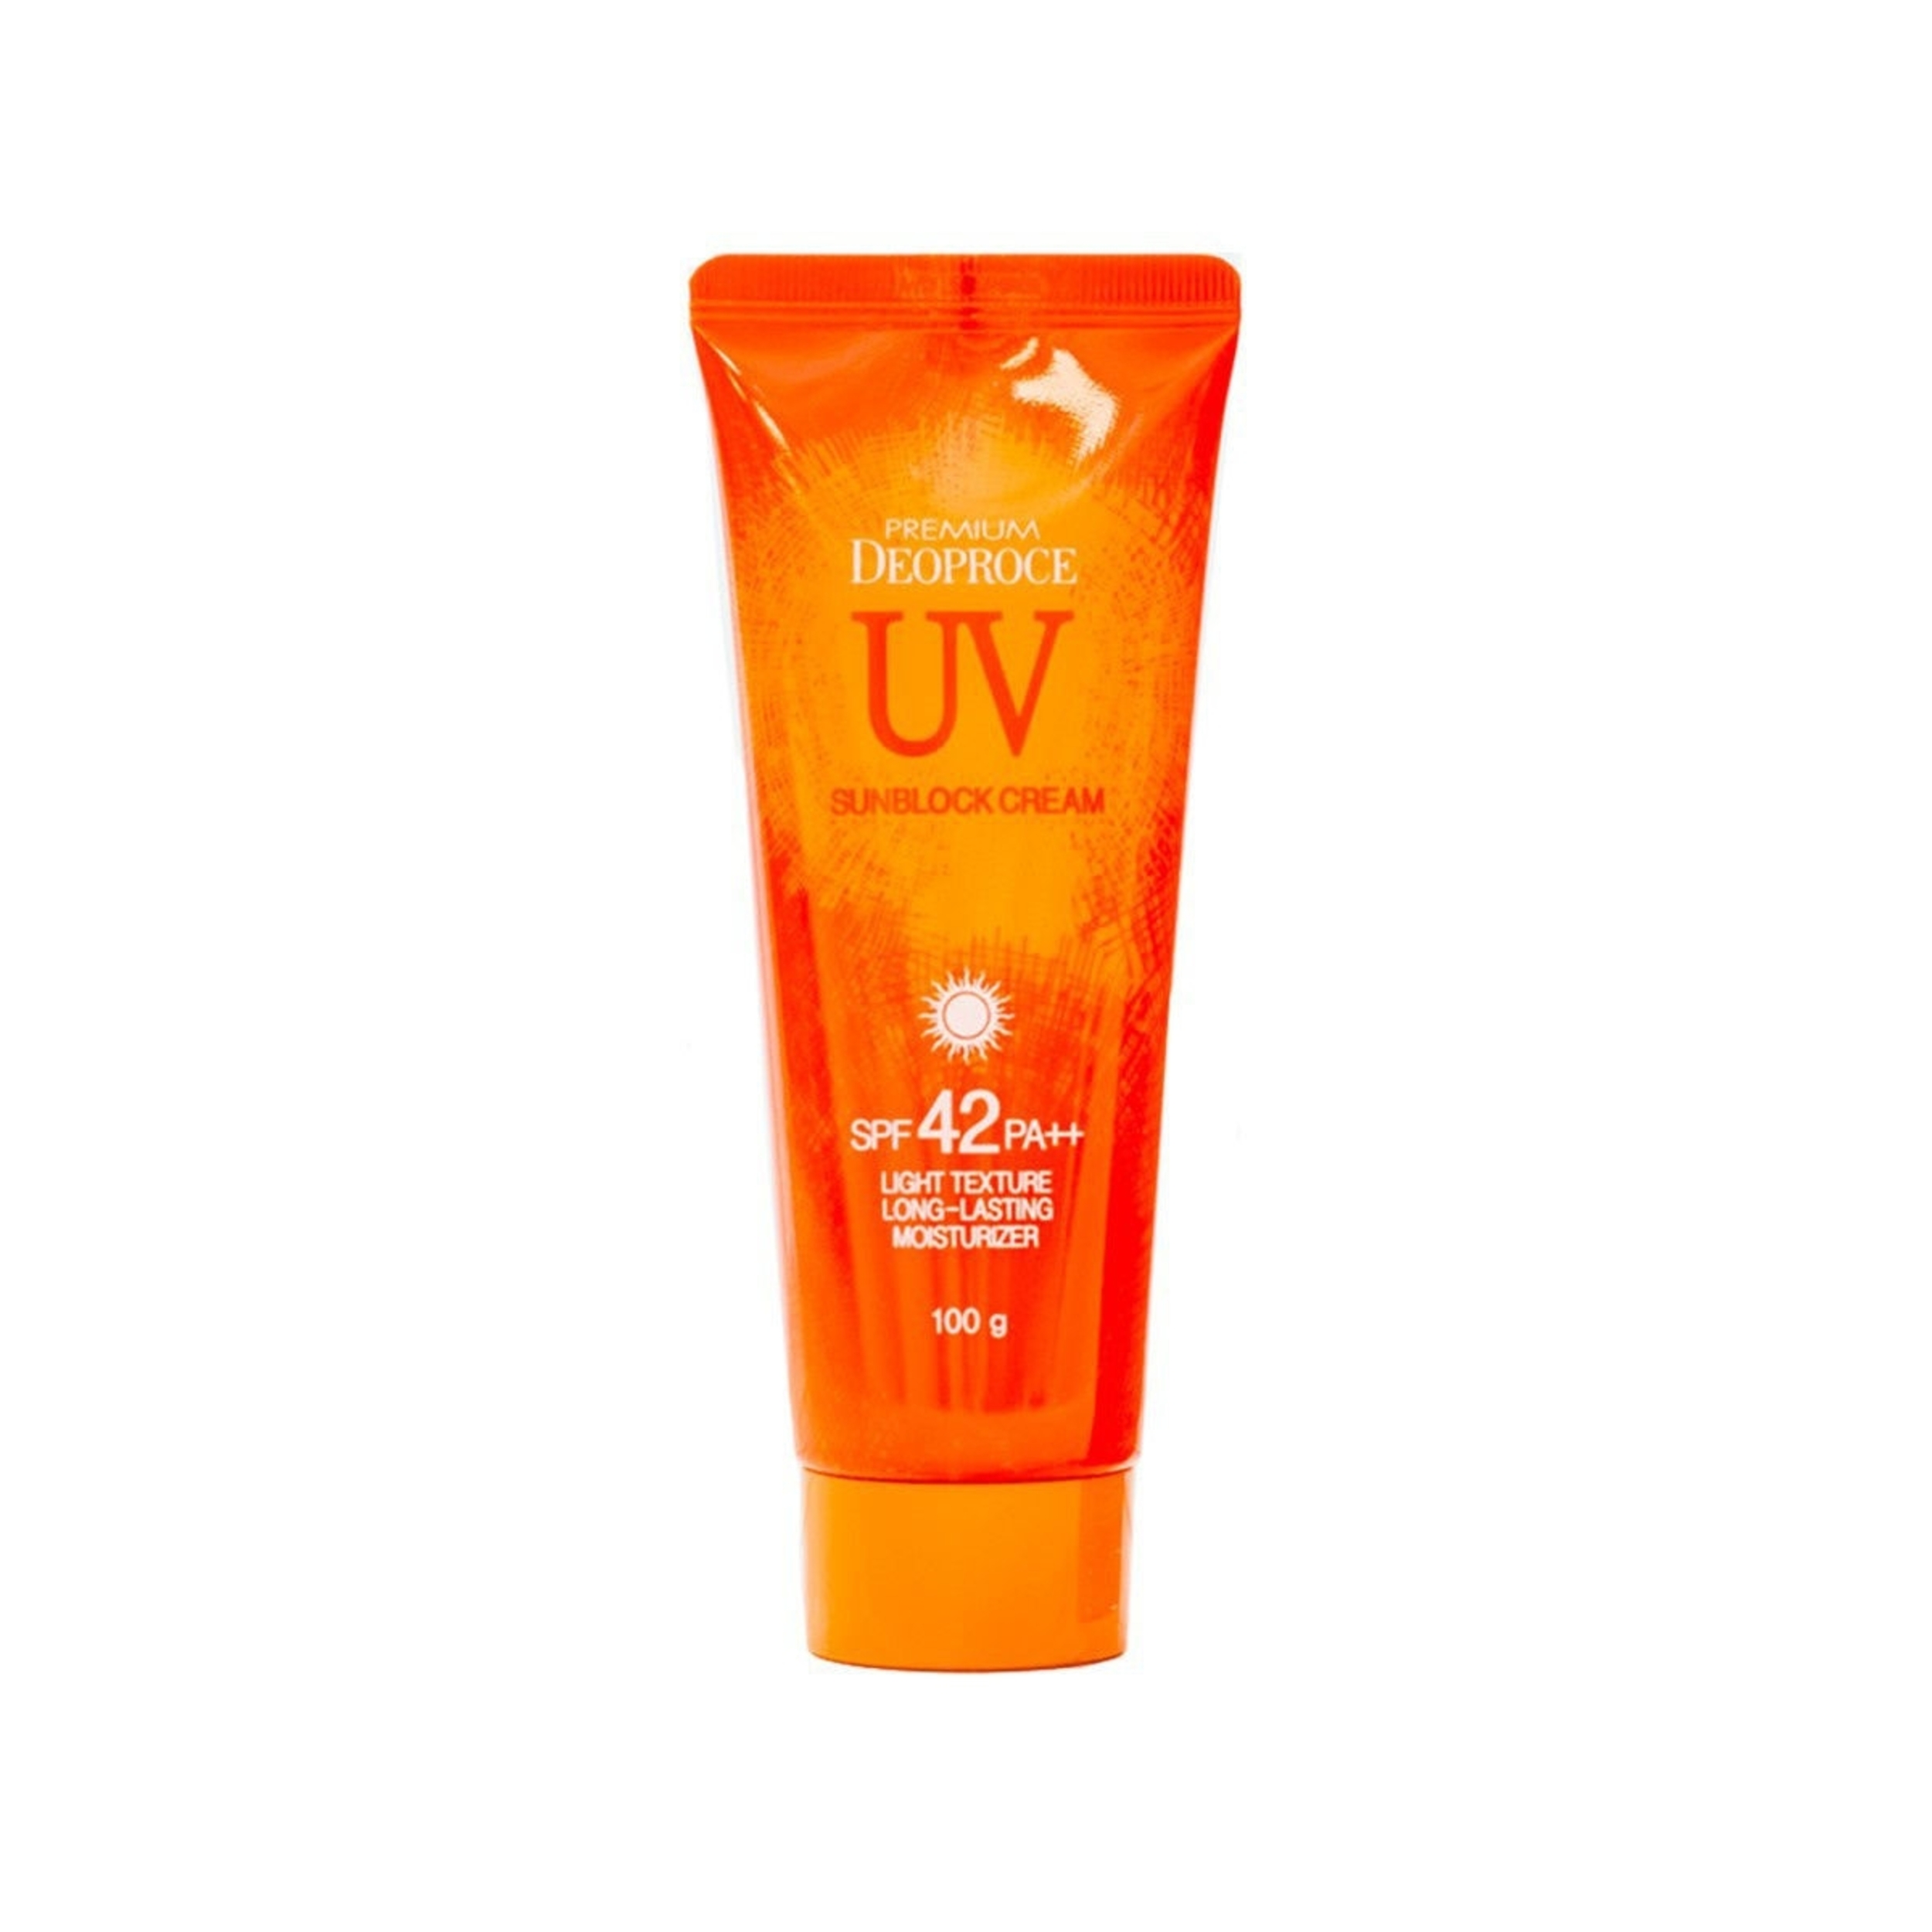 Uv sun block. UV Sunblock Cream spf42. ДП Sun крем Premium Deoproce UV Sunblock Cream spf42 pa++ 100g. Солнцезащитный крем Deoproce Premium UV Sun Block Cream spf42 pa++ 100 гр. Deoproce SPF 50.